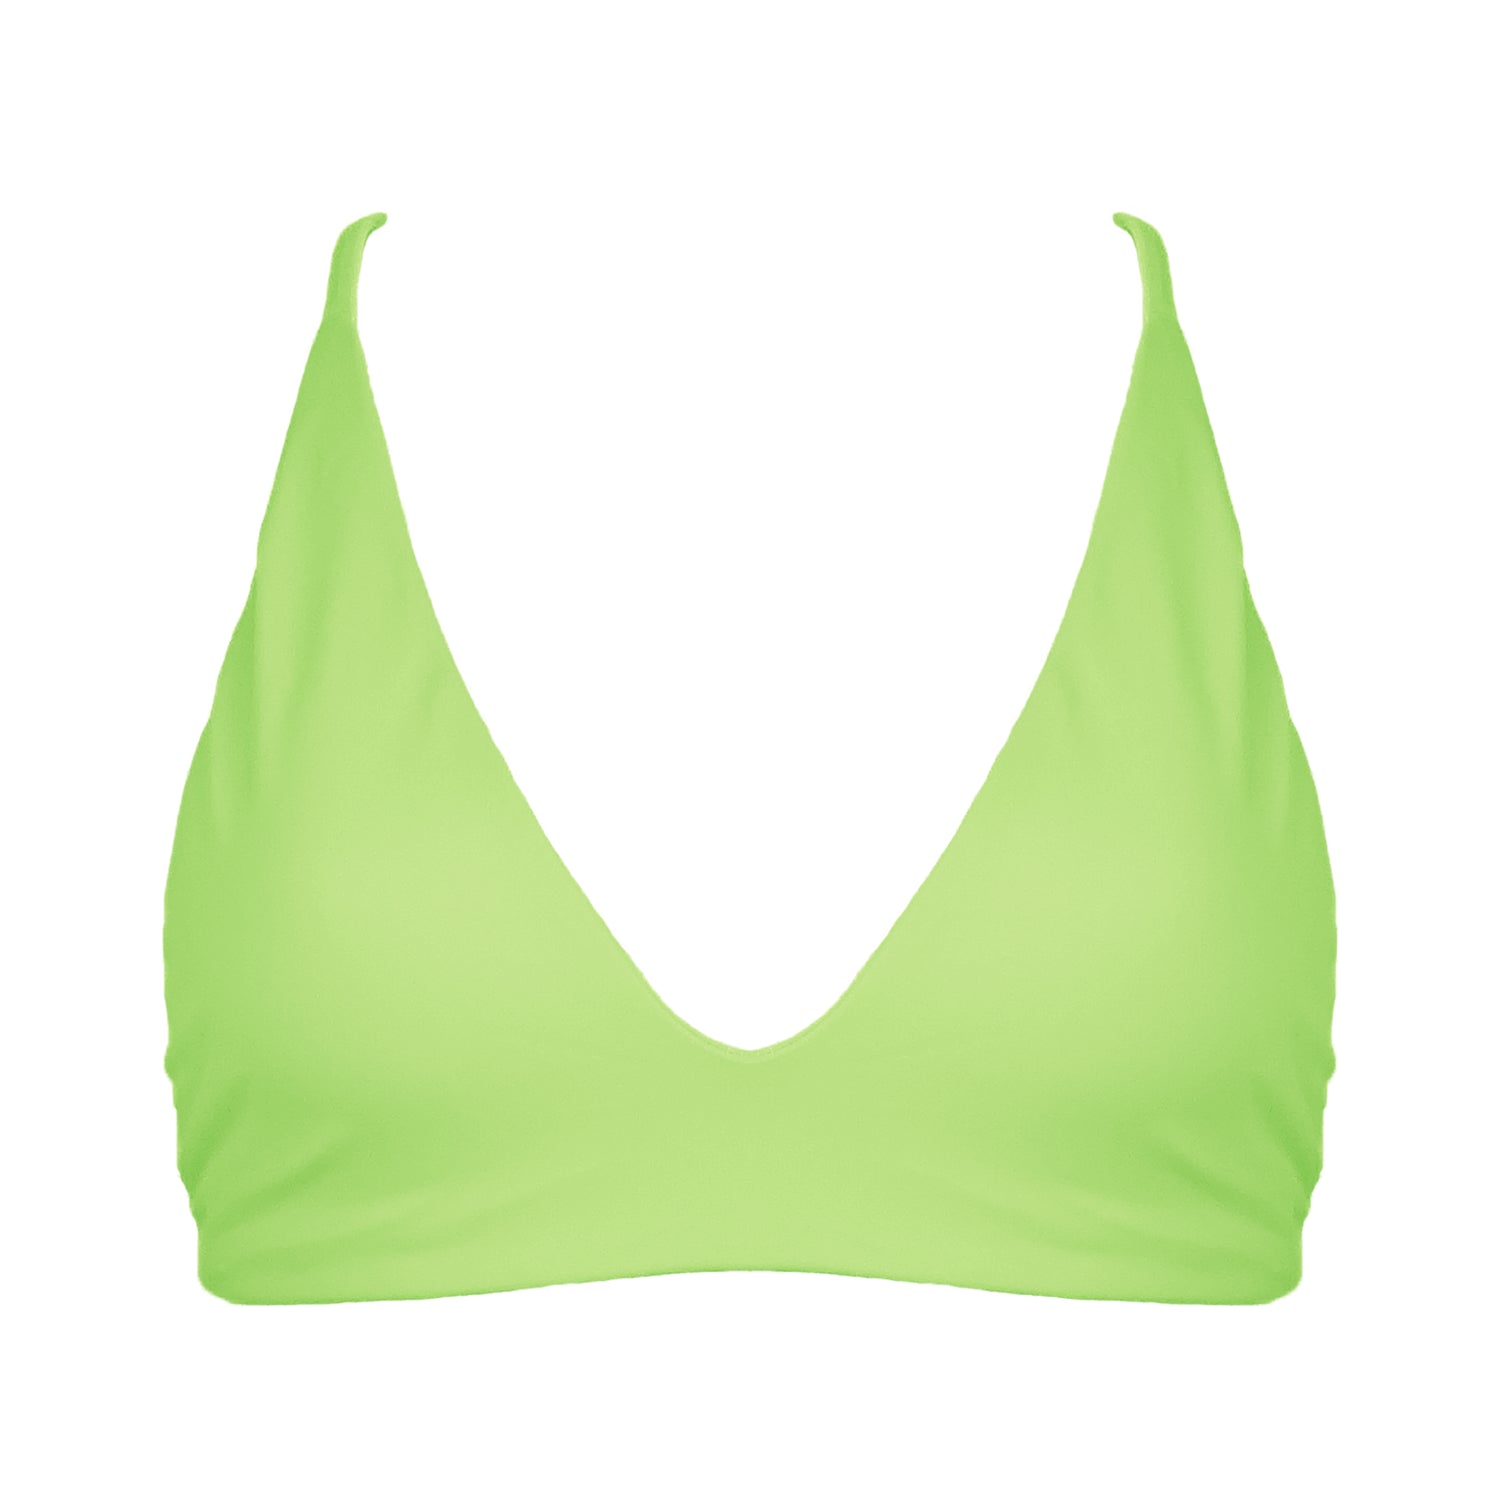 Light neon green Bralette style, triangle bikini top with plunging v-neckline, adjustable tie back strap and adjustable shoulder straps. 